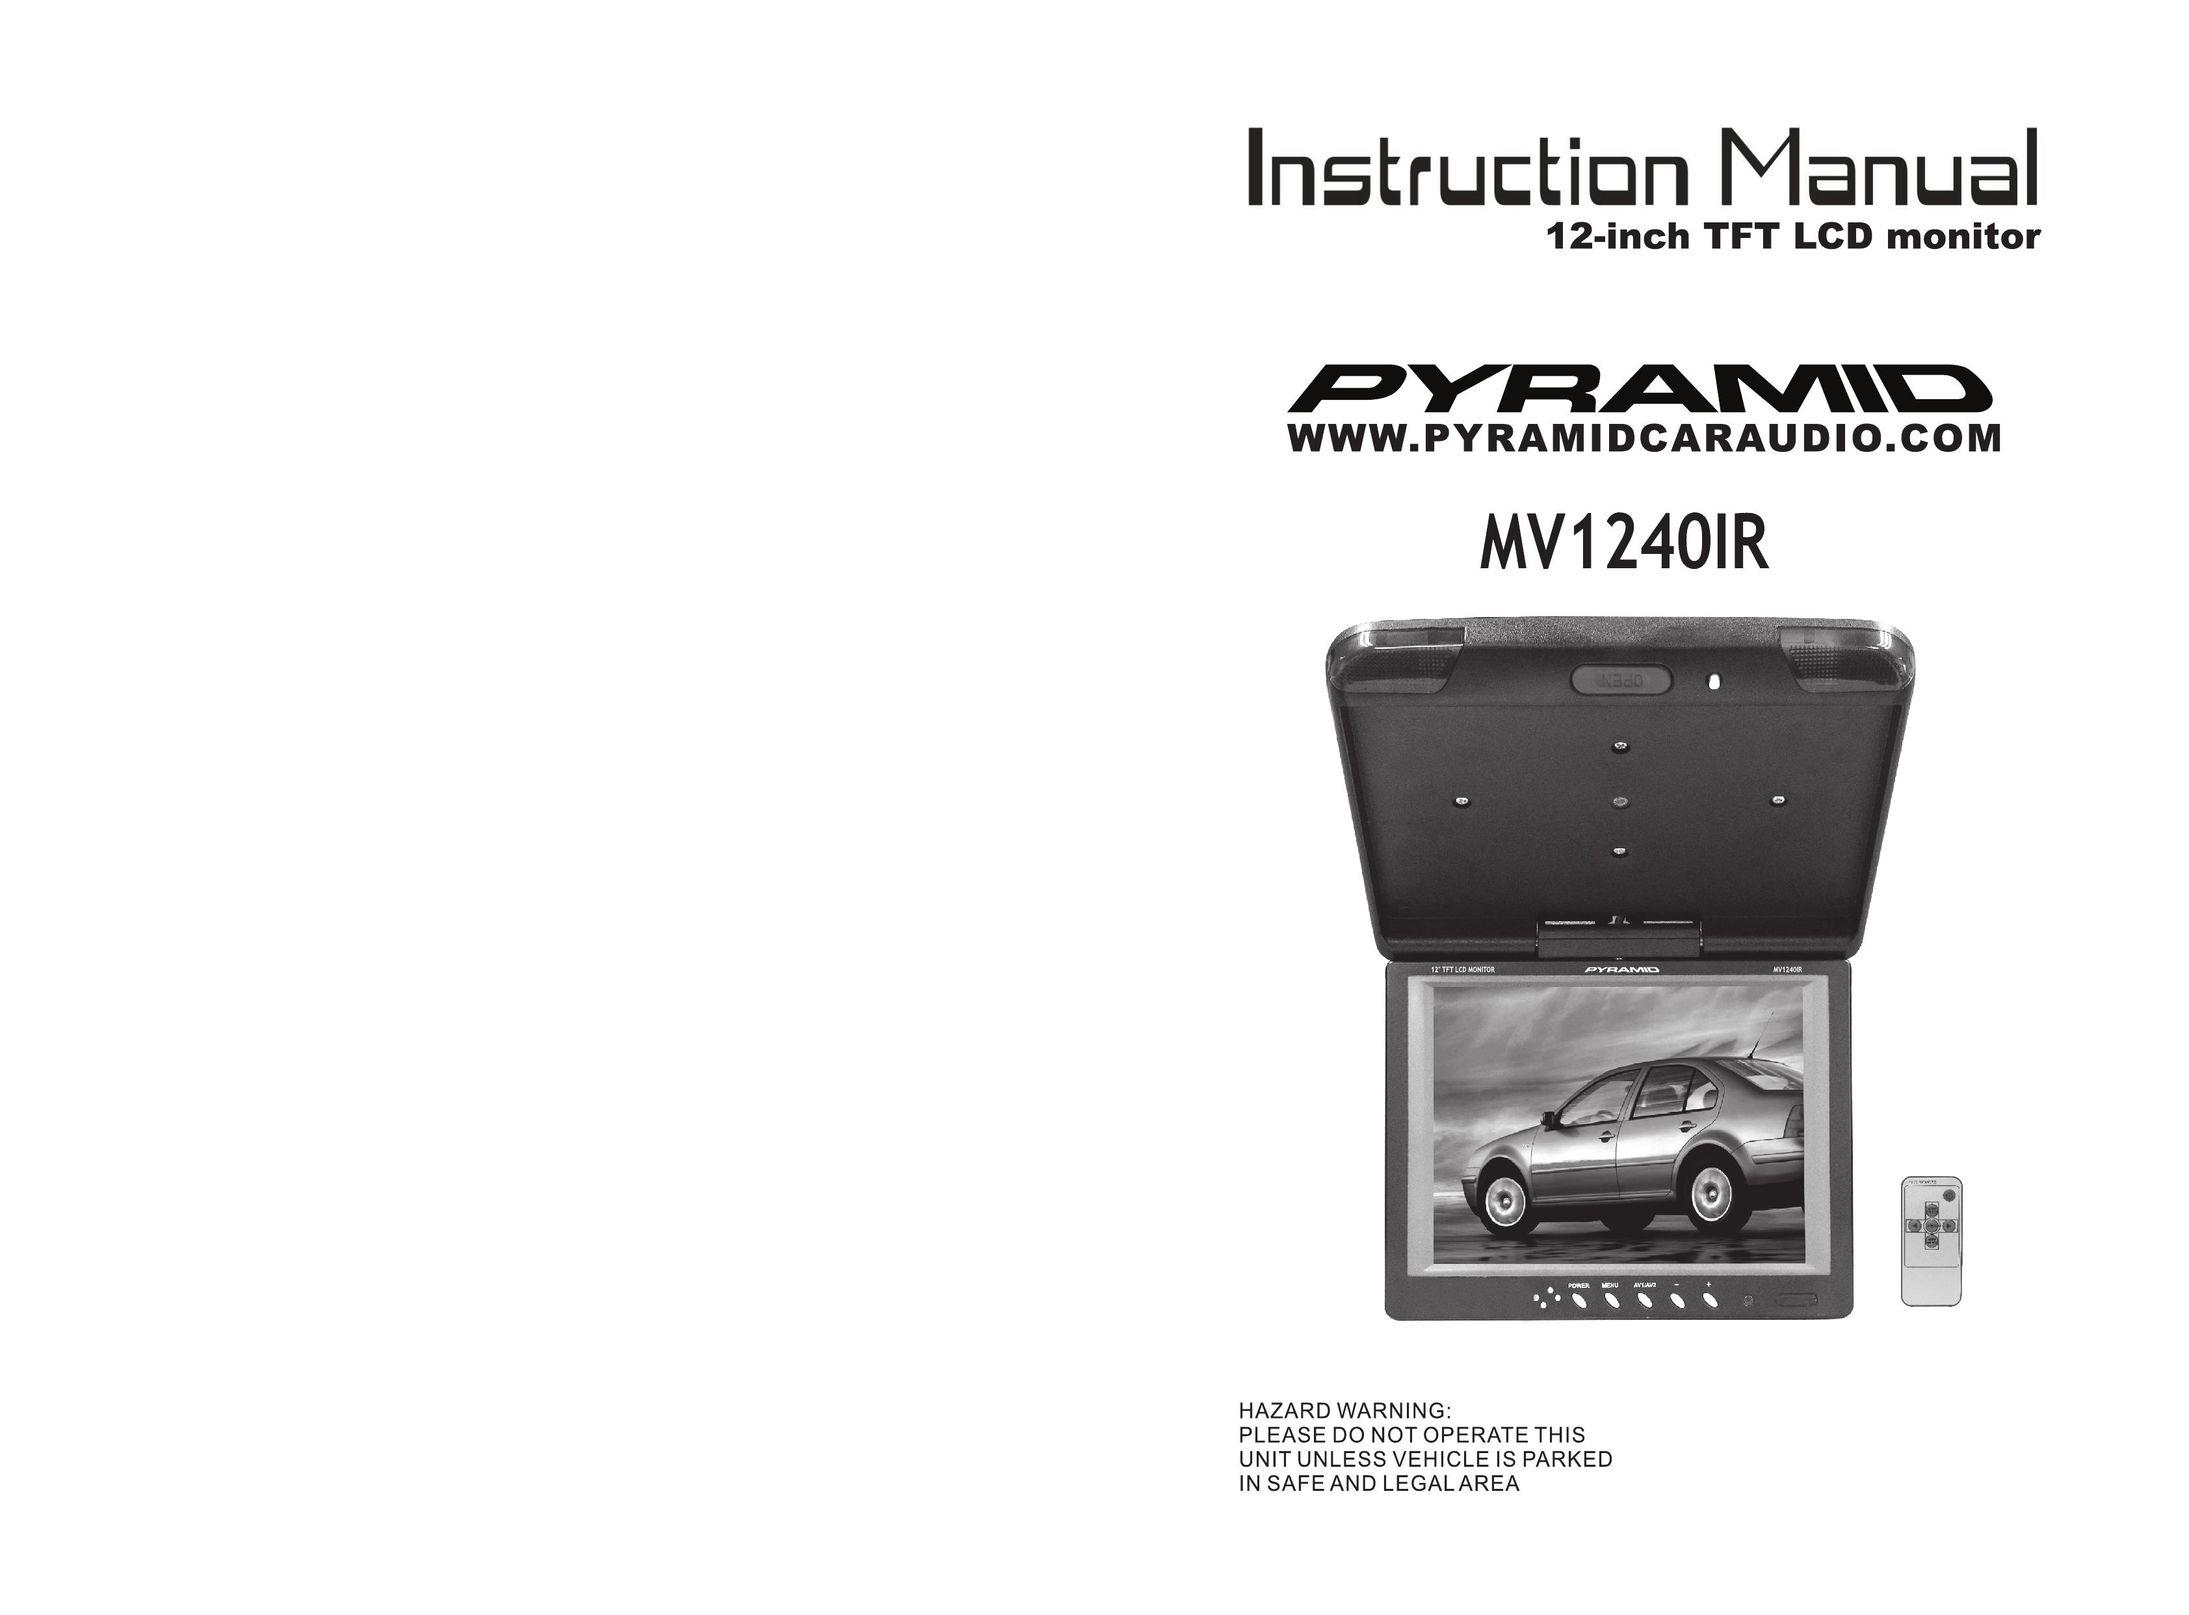 Pyramid Car Audio MV1240IR Car Stereo System User Manual